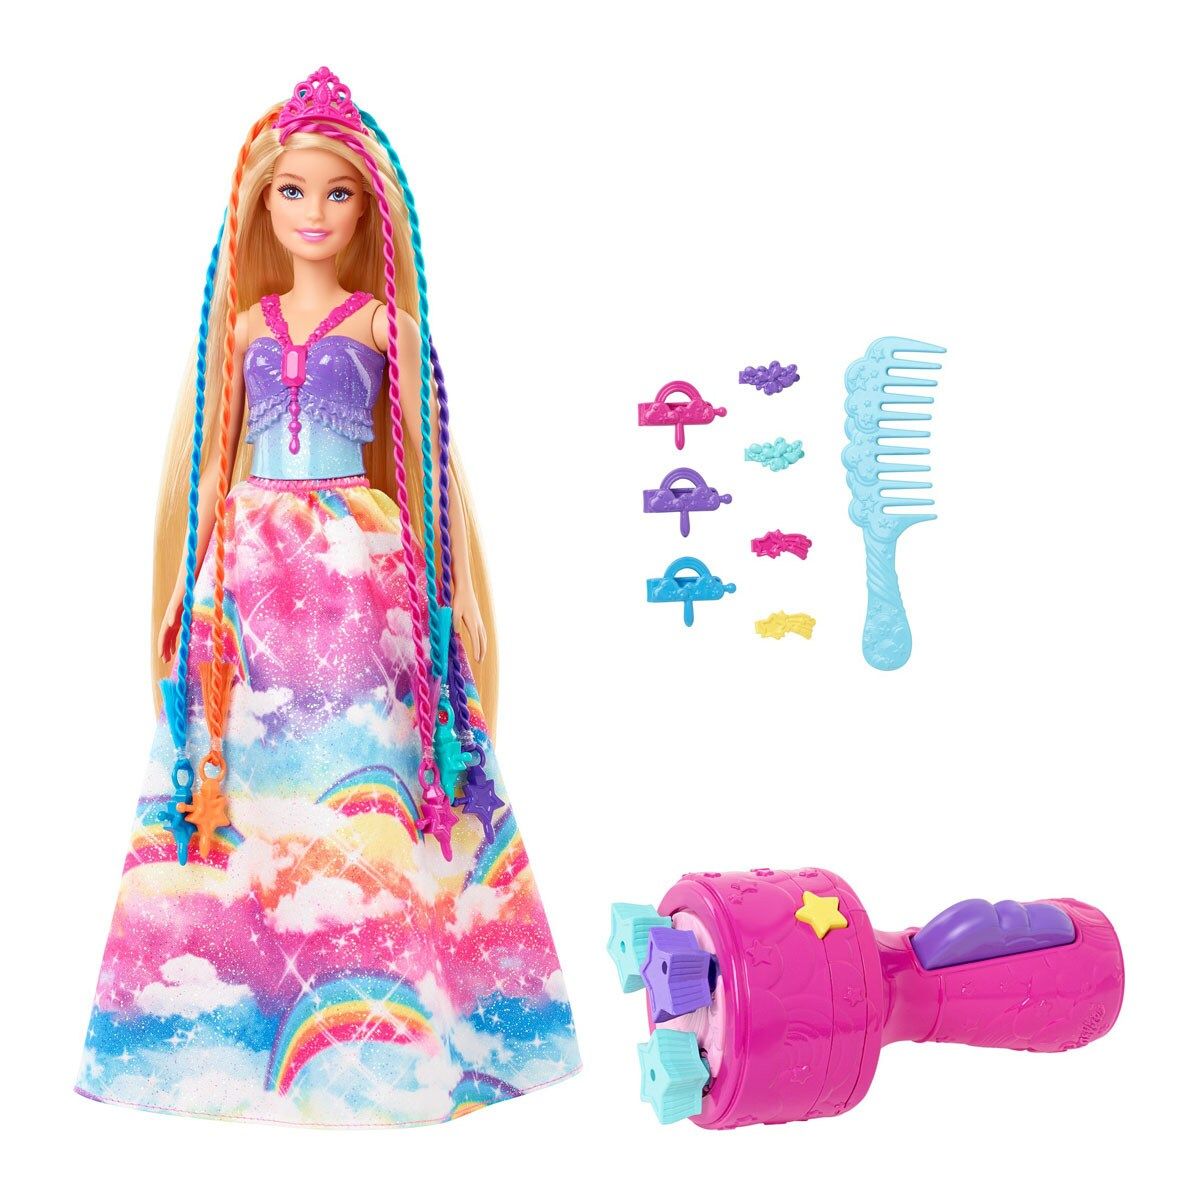 Poupée barbie dreamtopia multicolore Mattel